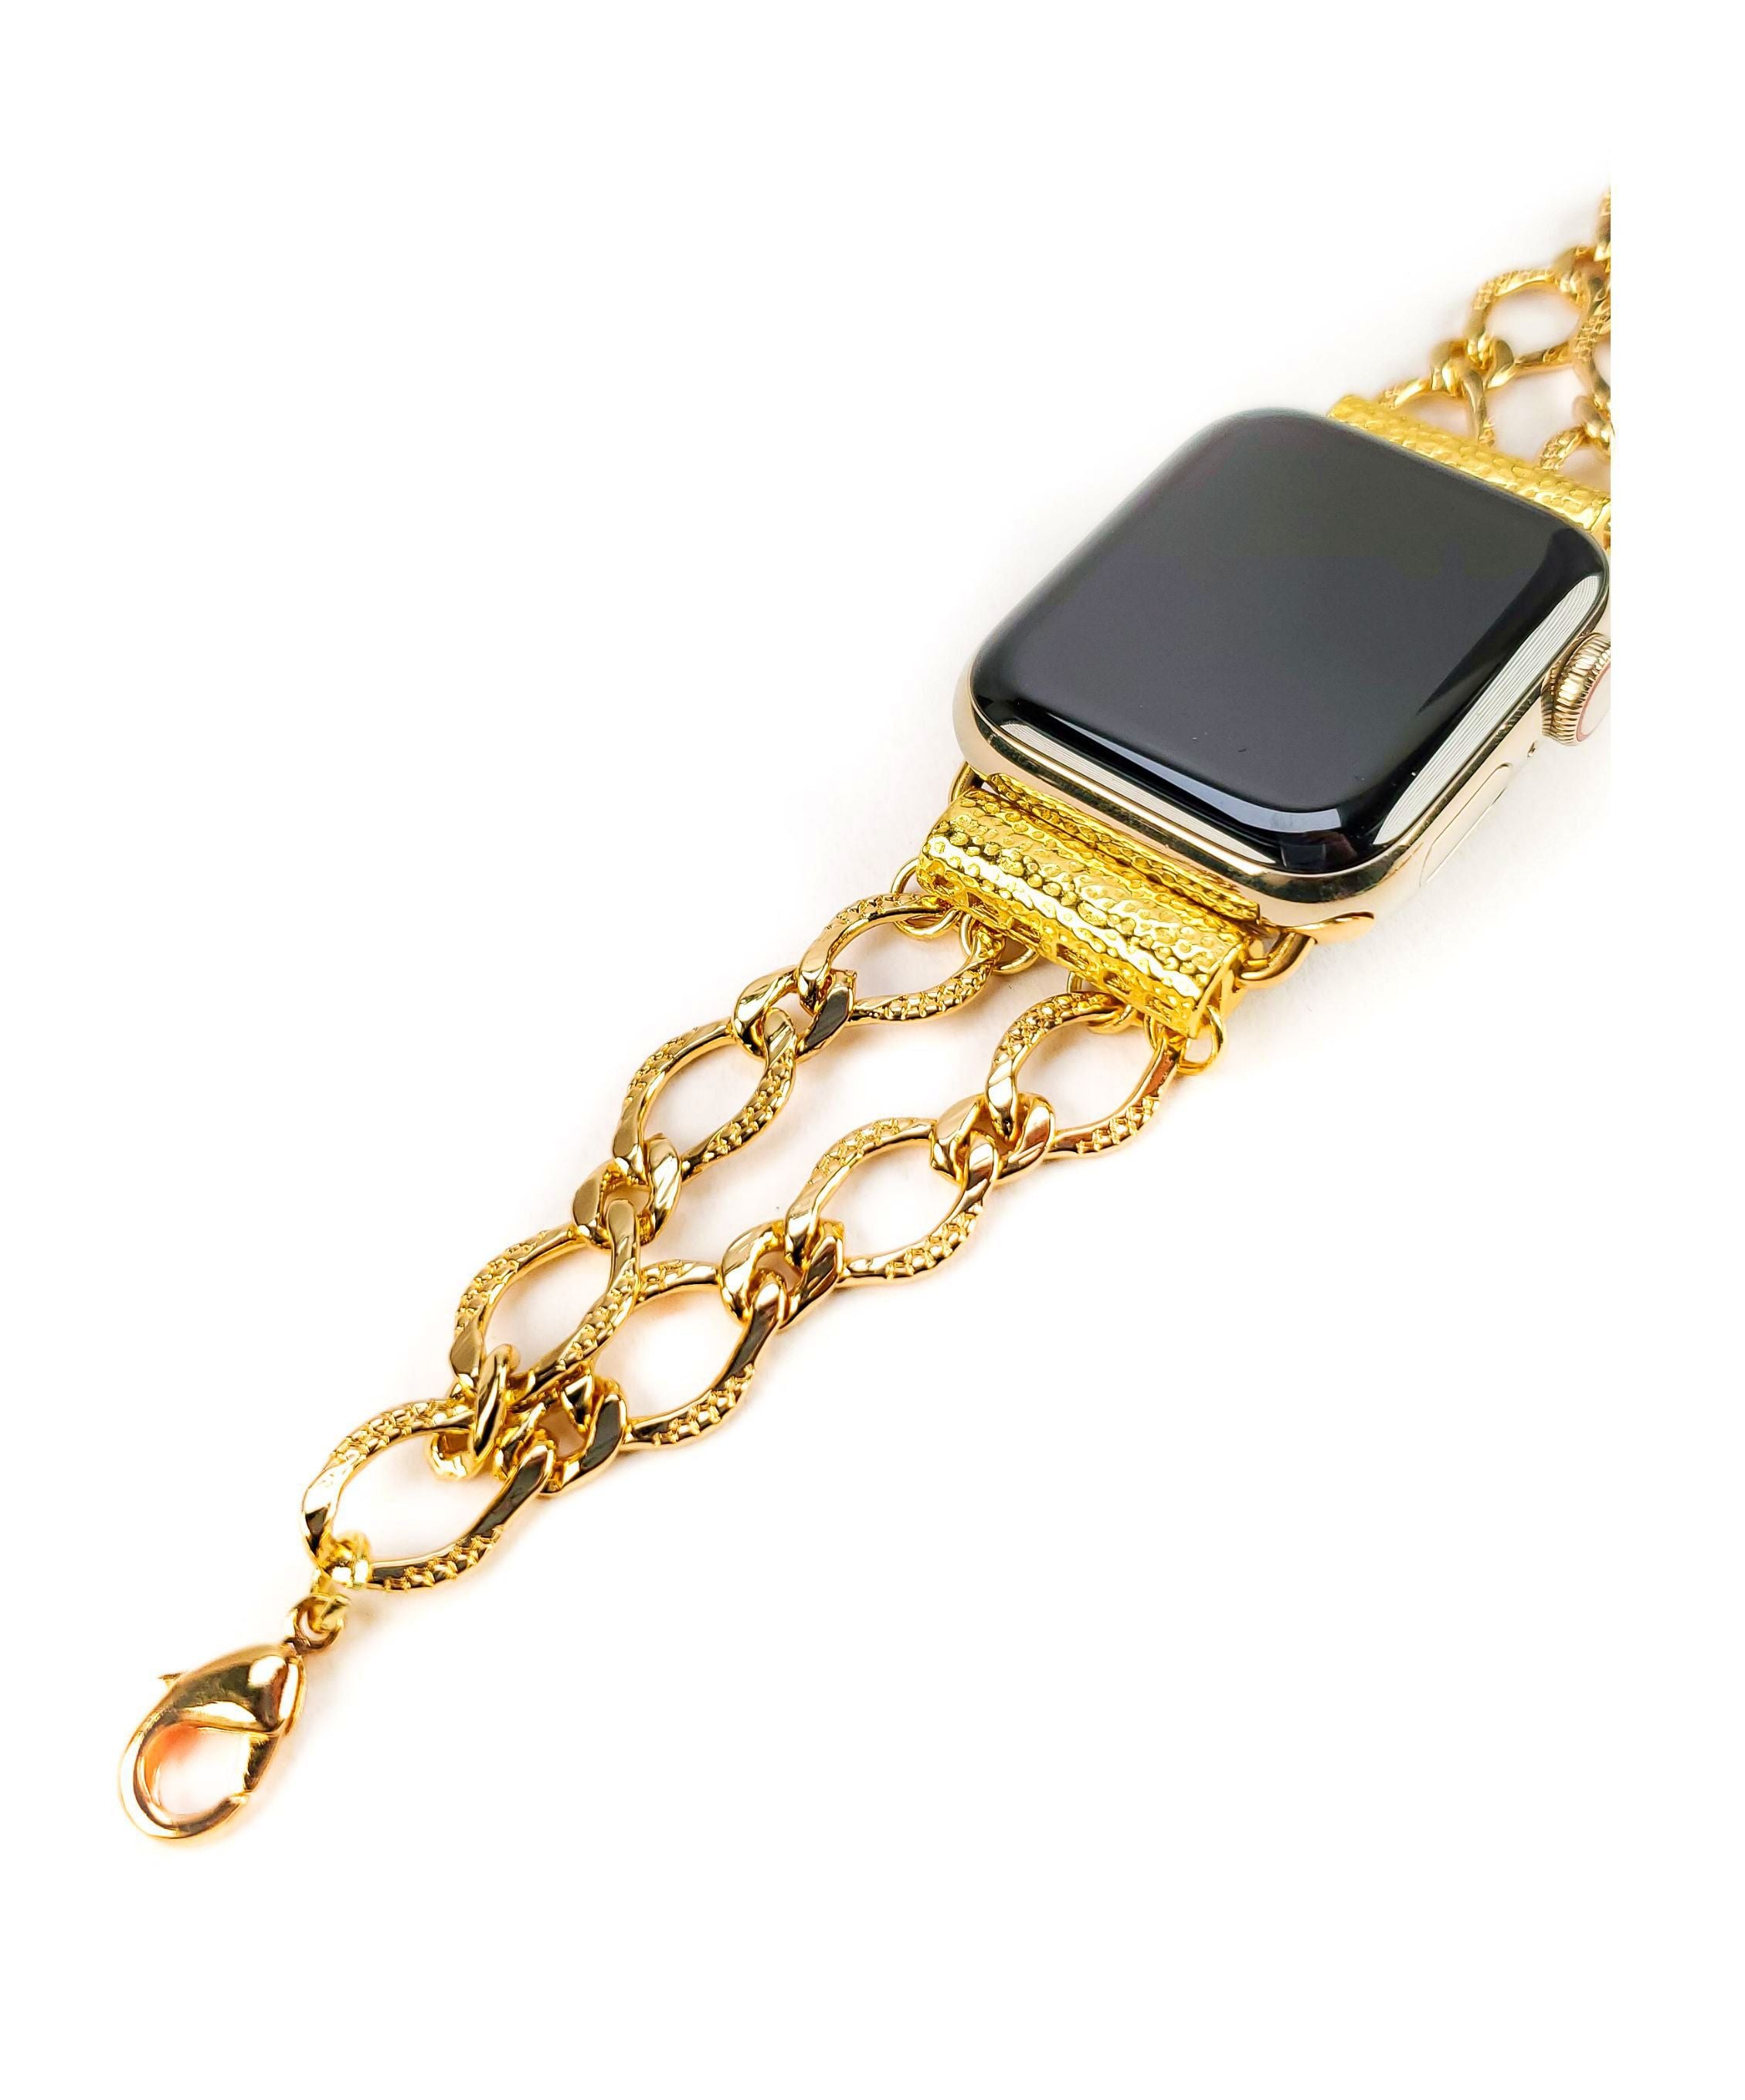 BIGLUP Gold Chain Watch Bracelet Band